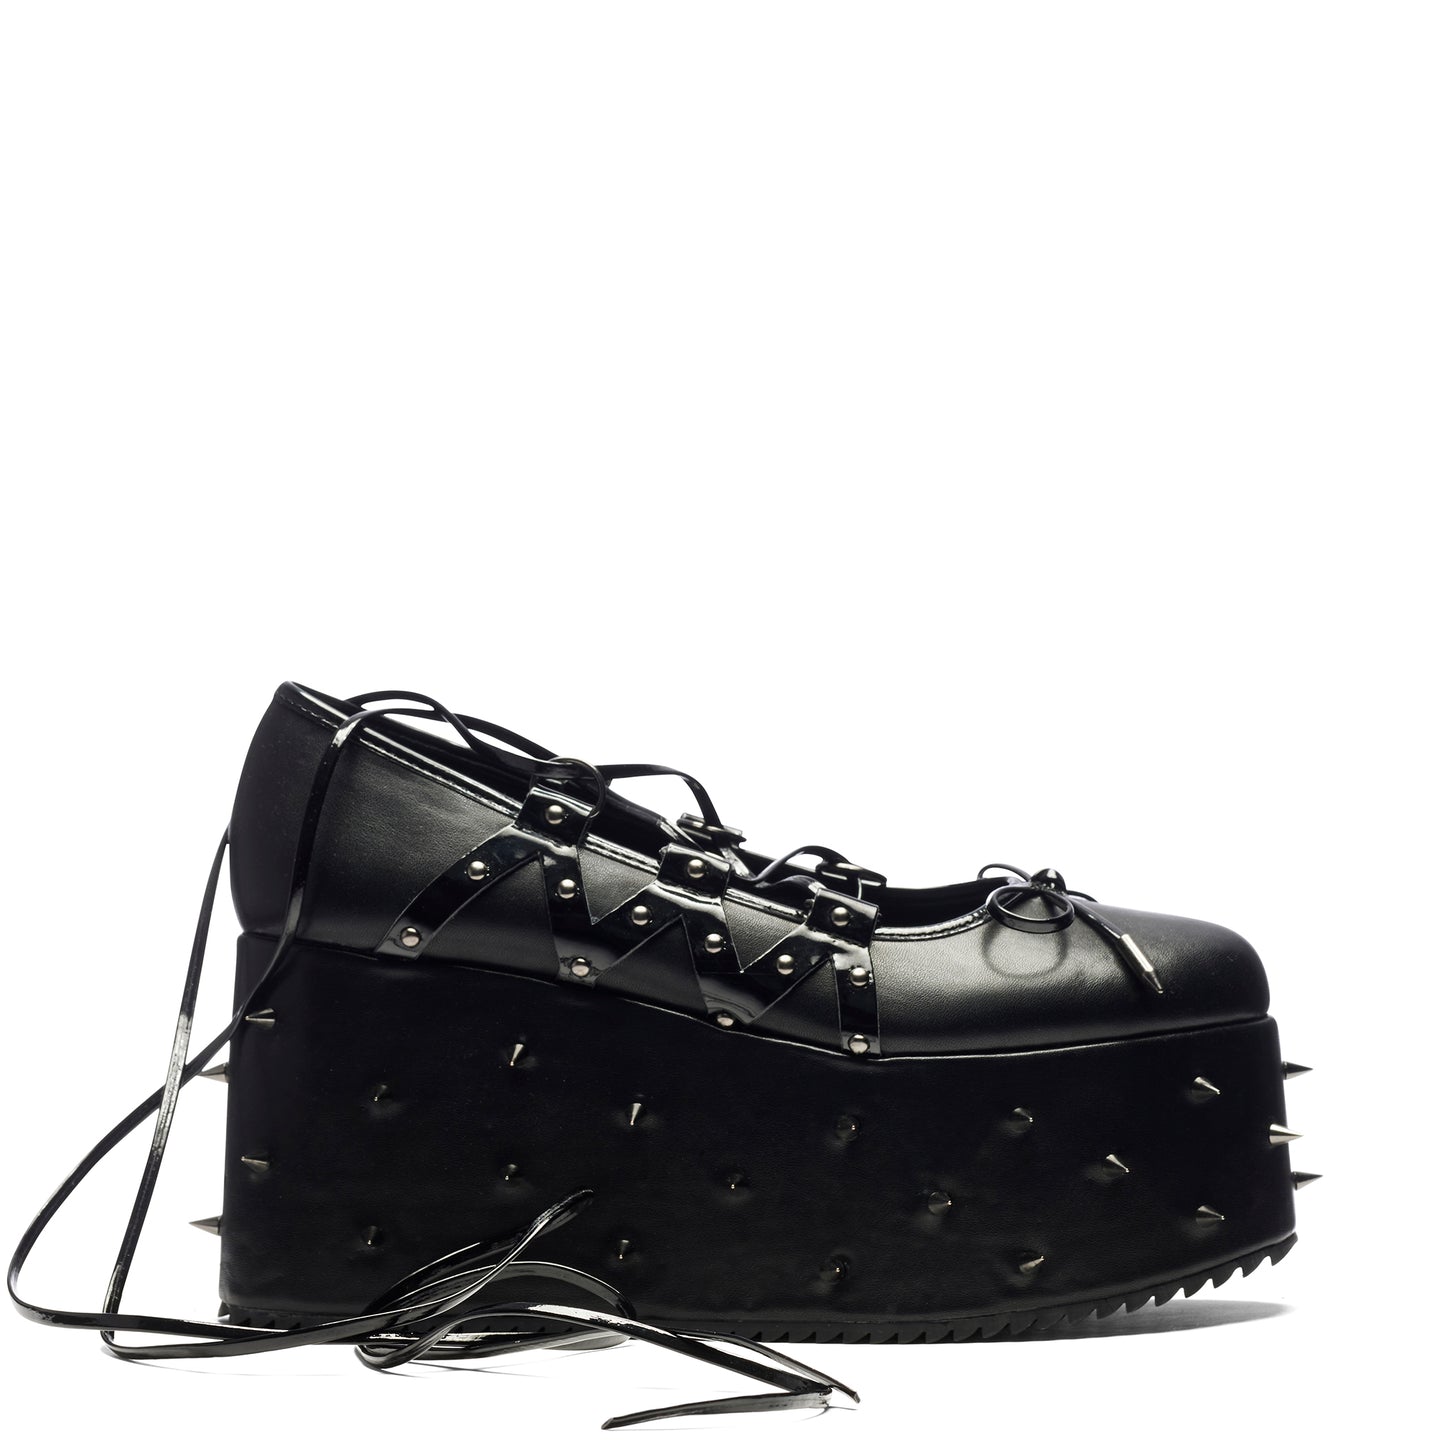 Zorina Lace Up Platform Ballet Shoes - Black - Koi Footwear - Side View